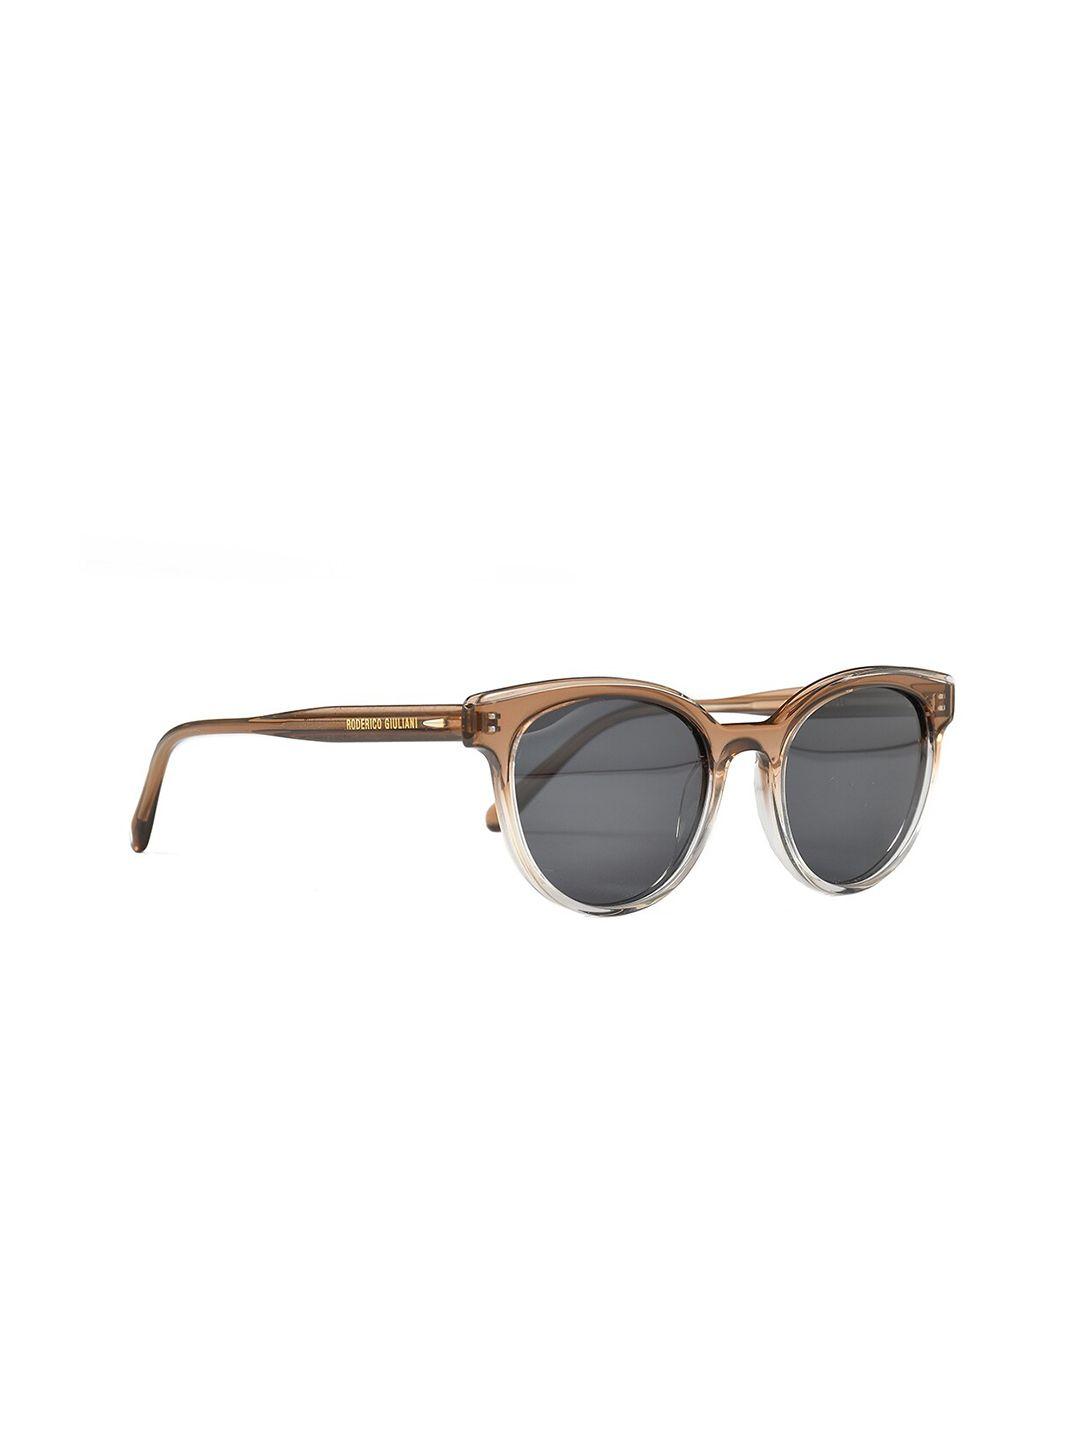 roderico giuliani oval sunglasses with polarised & uv protected lens